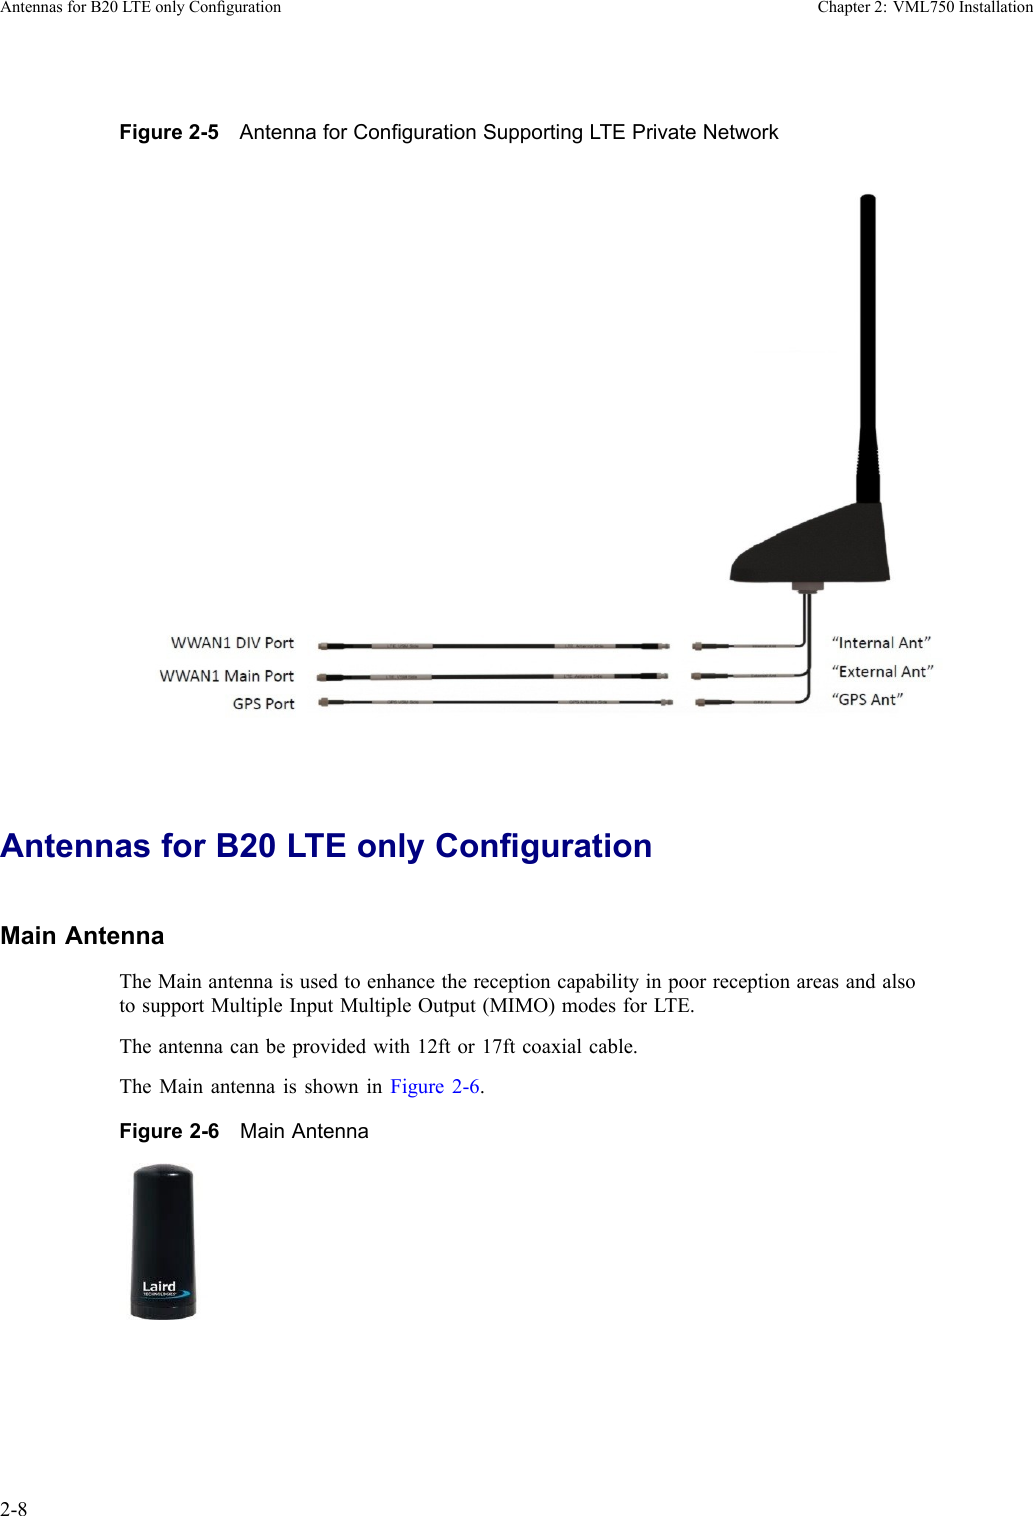 AntennasforB20LTEonlyCongurationChapter2:VML750InstallationFigure2-5AntennaforCongurationSupportingLTEPrivateNetworkAntennasforB20LTEonlyCongurationMainAntennaTheMainantennaisusedtoenhancethereceptioncapabilityinpoorreceptionareasandalsotosupportMultipleInputMultipleOutput(MIMO)modesforLTE.Theantennacanbeprovidedwith12ftor17ftcoaxialcable.TheMainantennaisshowninFigure2-6.Figure2-6MainAntenna2-86802988C54-BJuly2014